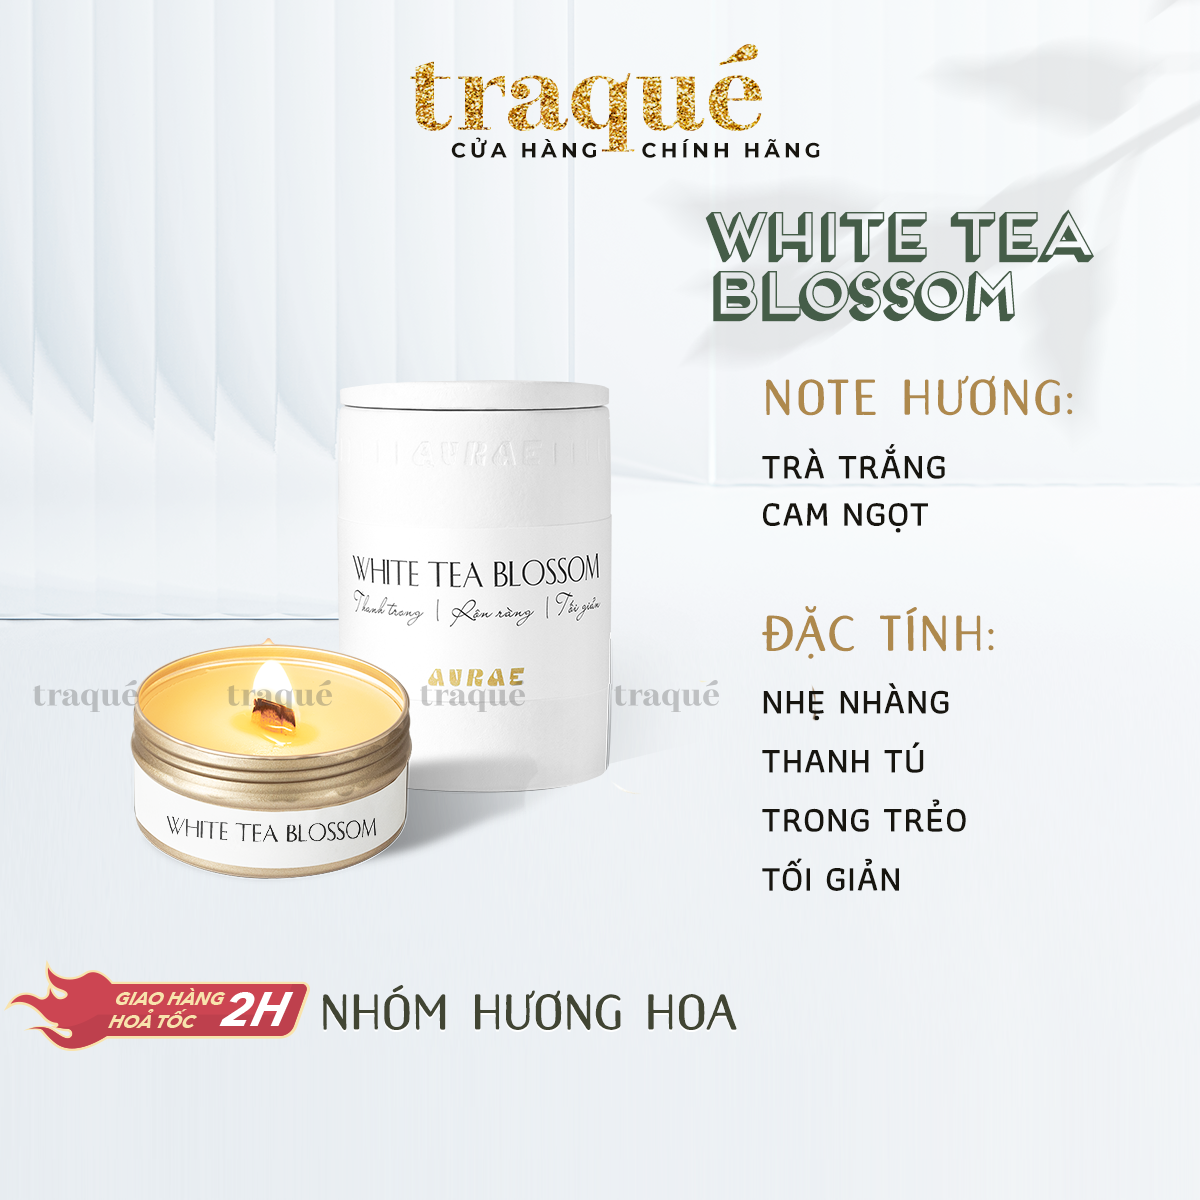 White Tea Blossom - Có thể refill